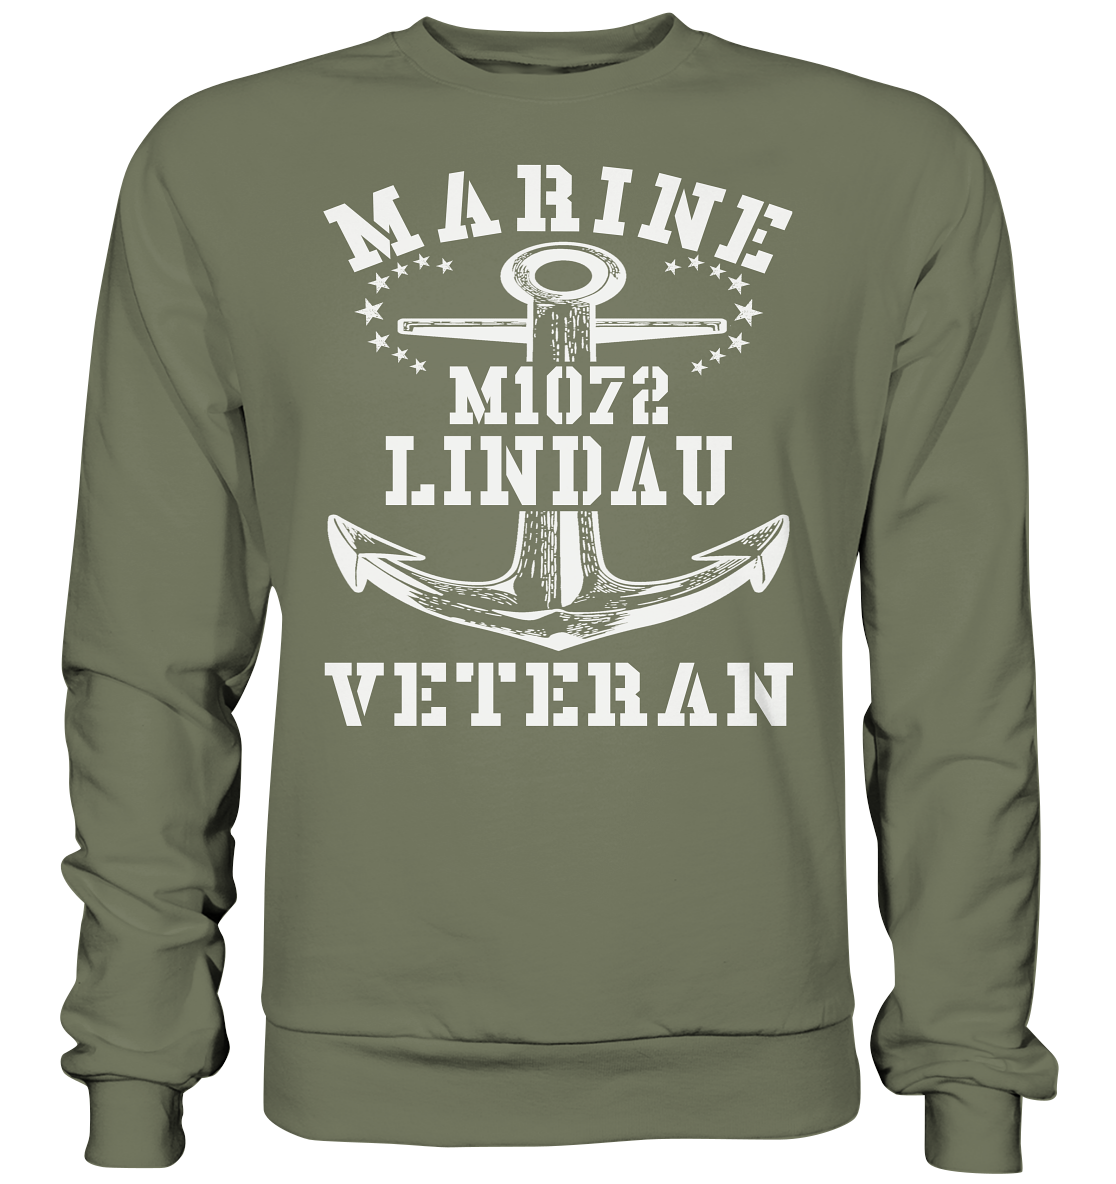 MARINE VETERAN M1072 LINDAU - Premium Sweatshirt